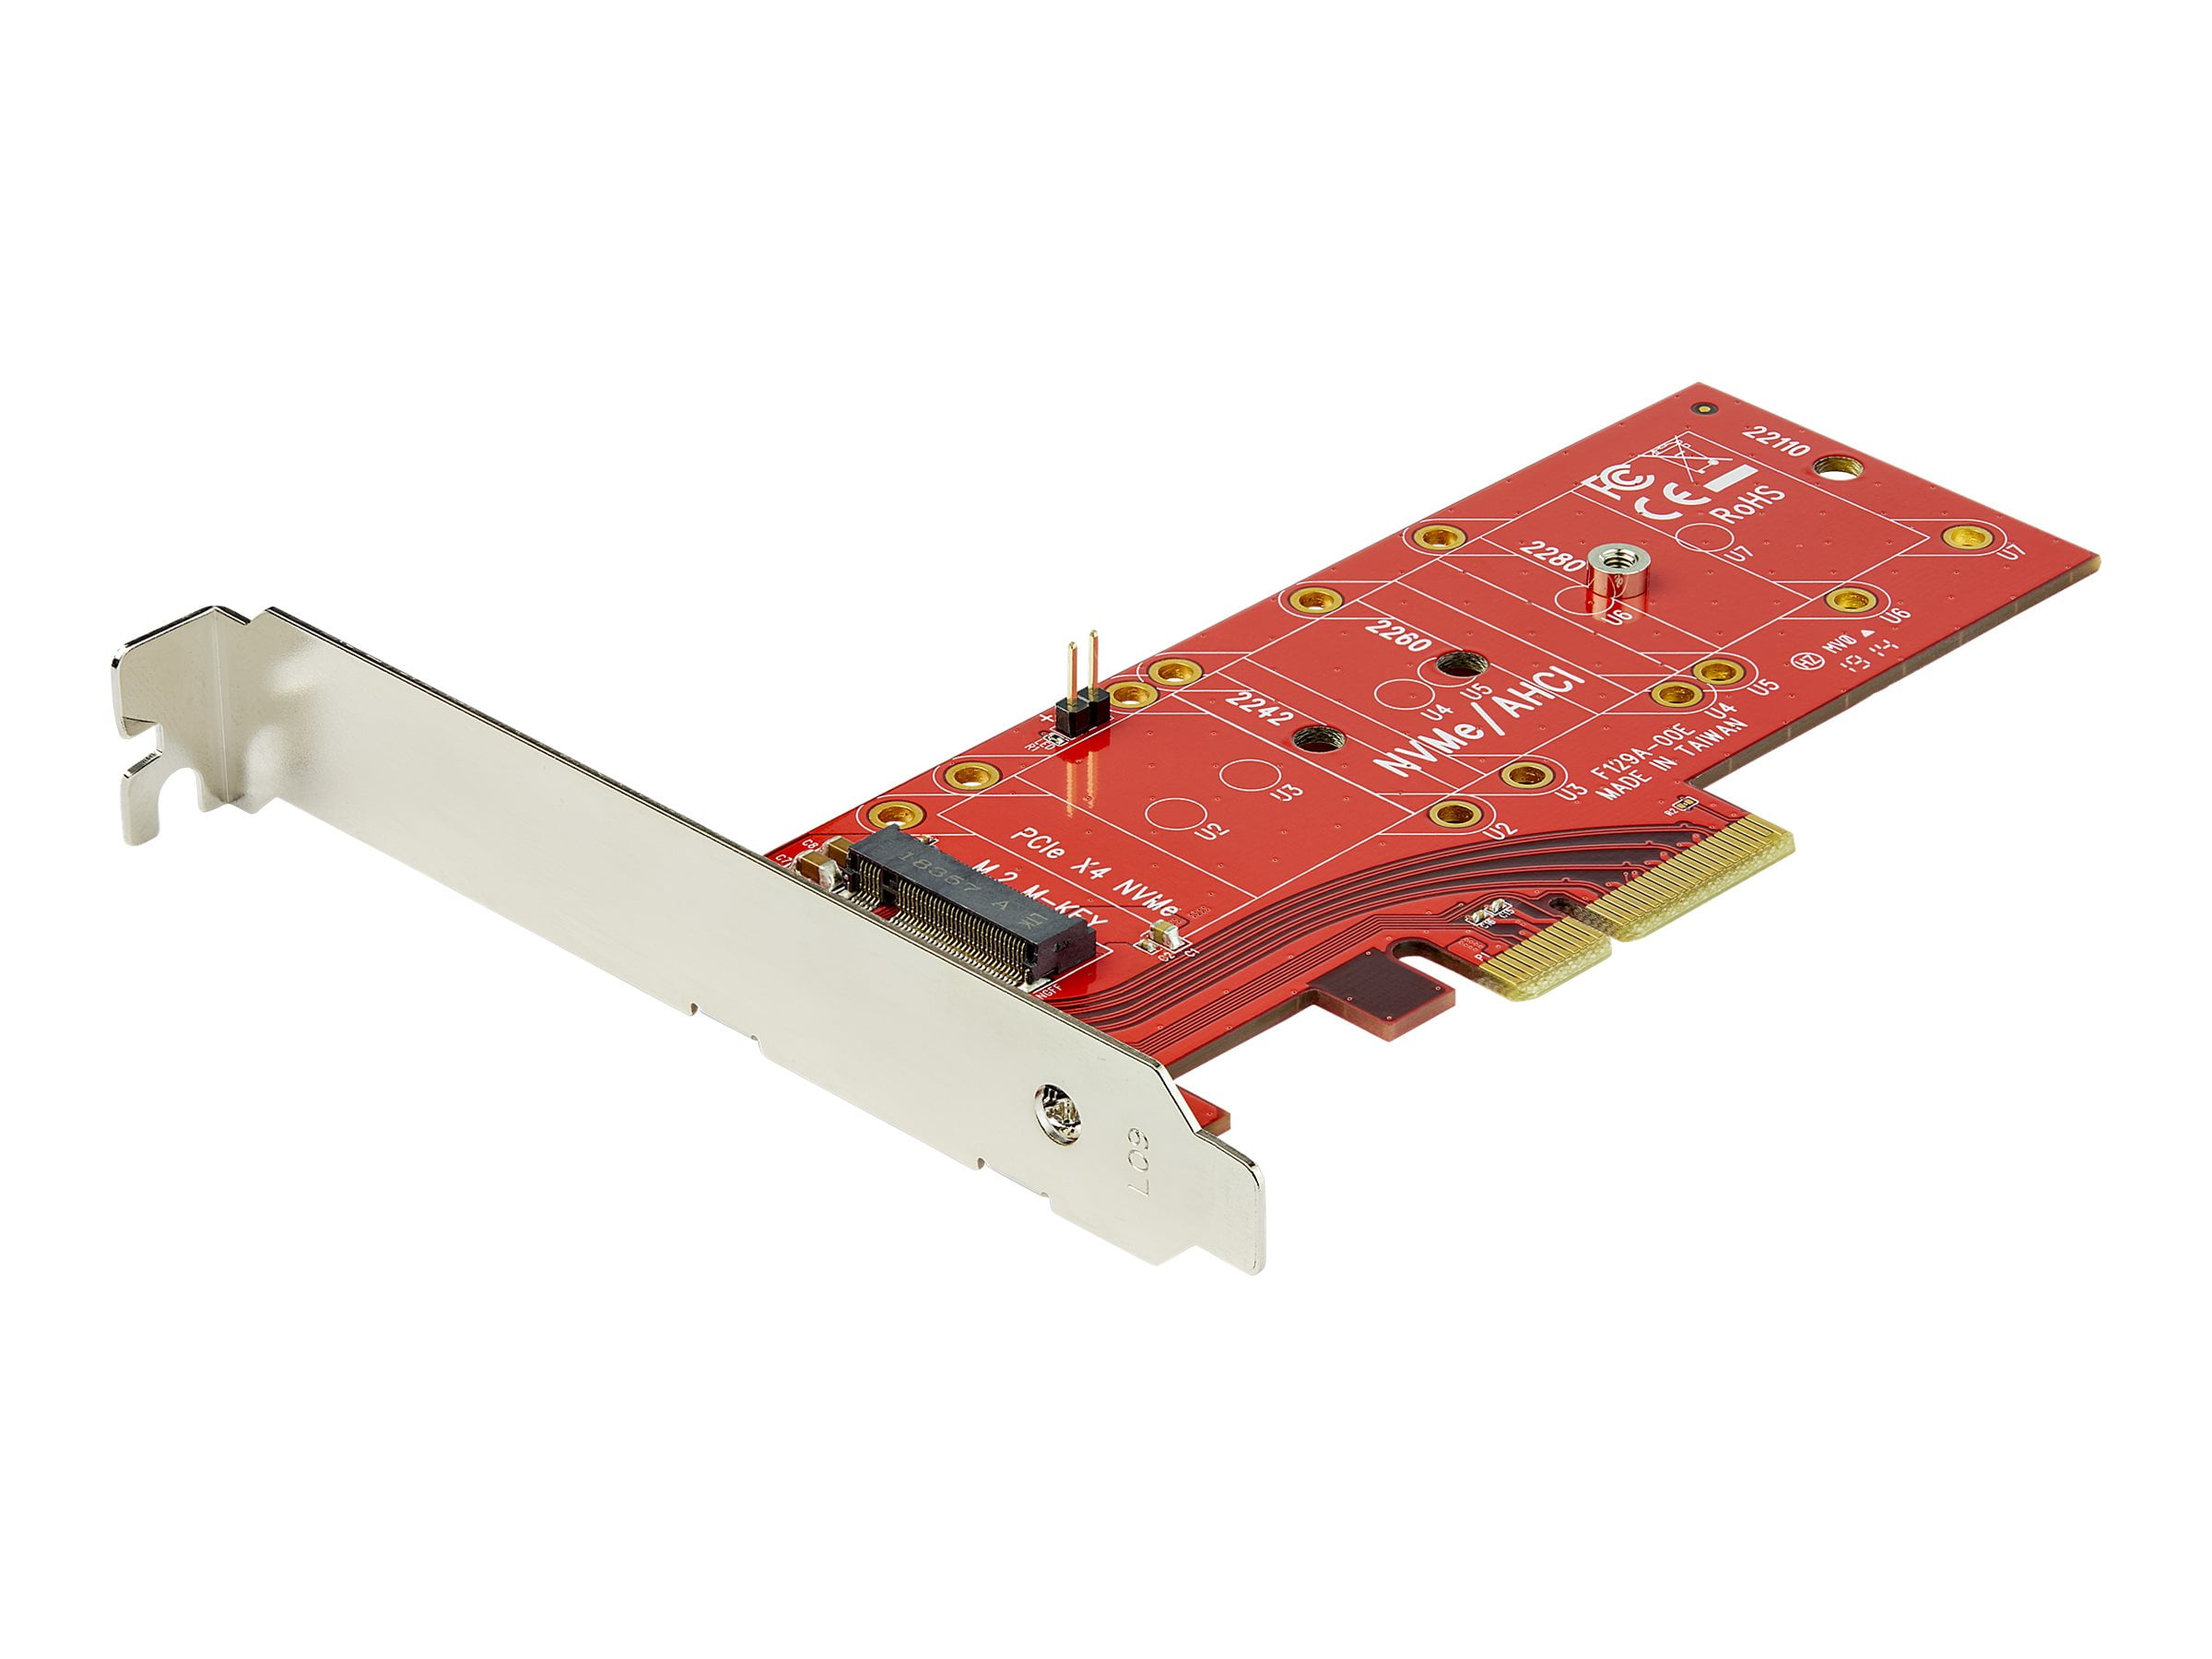 SIIG M.2 NGFF SSD M Key NVME PCIe 3.0 x 4 Card Adapter